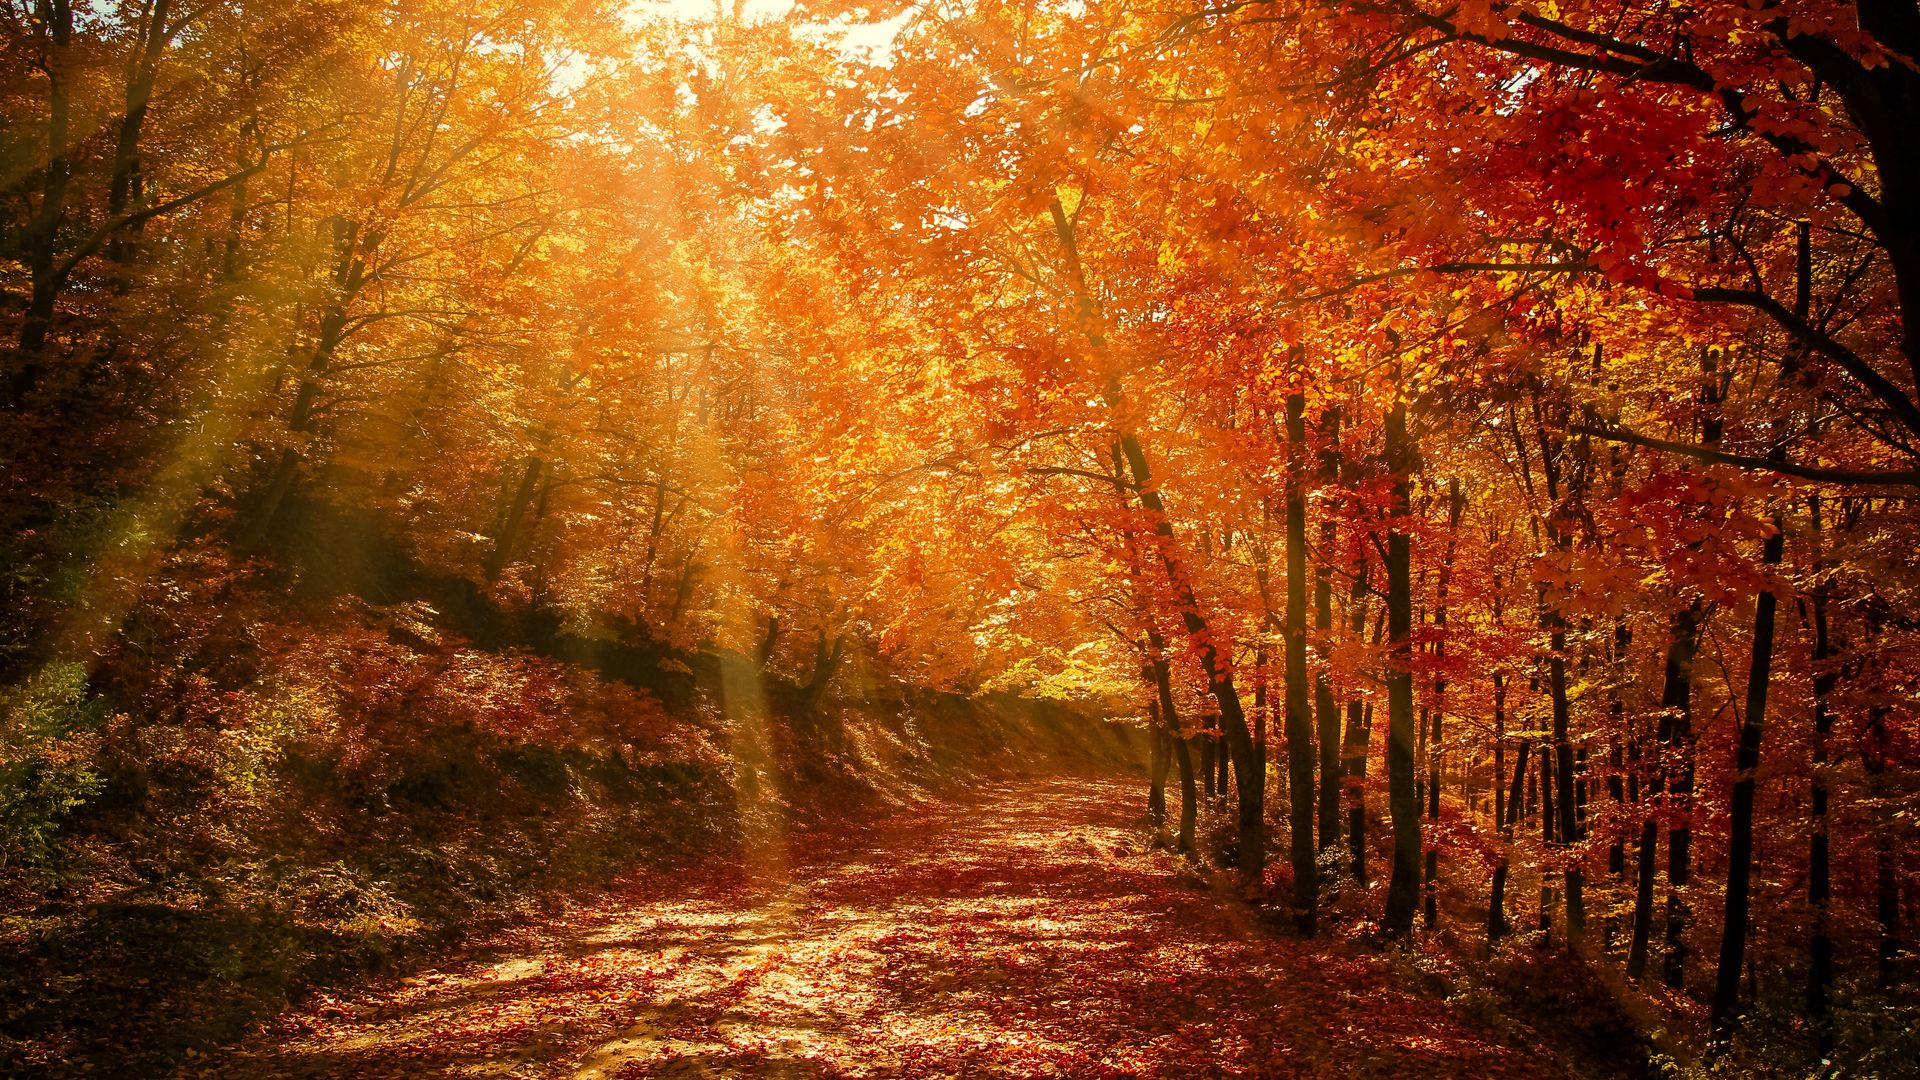 Download wallpaper 1920x1080 autumn, forest, park, foliage, sunlight full hd, hdtv, fhd, 1080p HD background